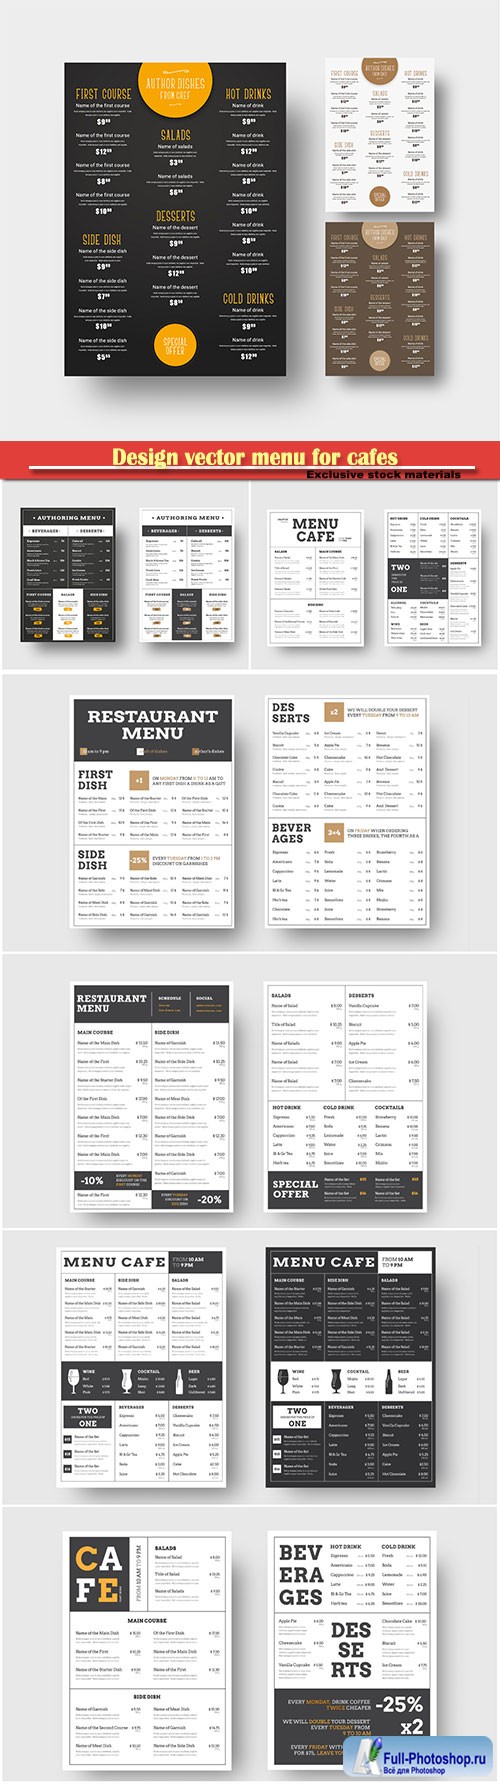 Design vector menu for cafes and restaurants